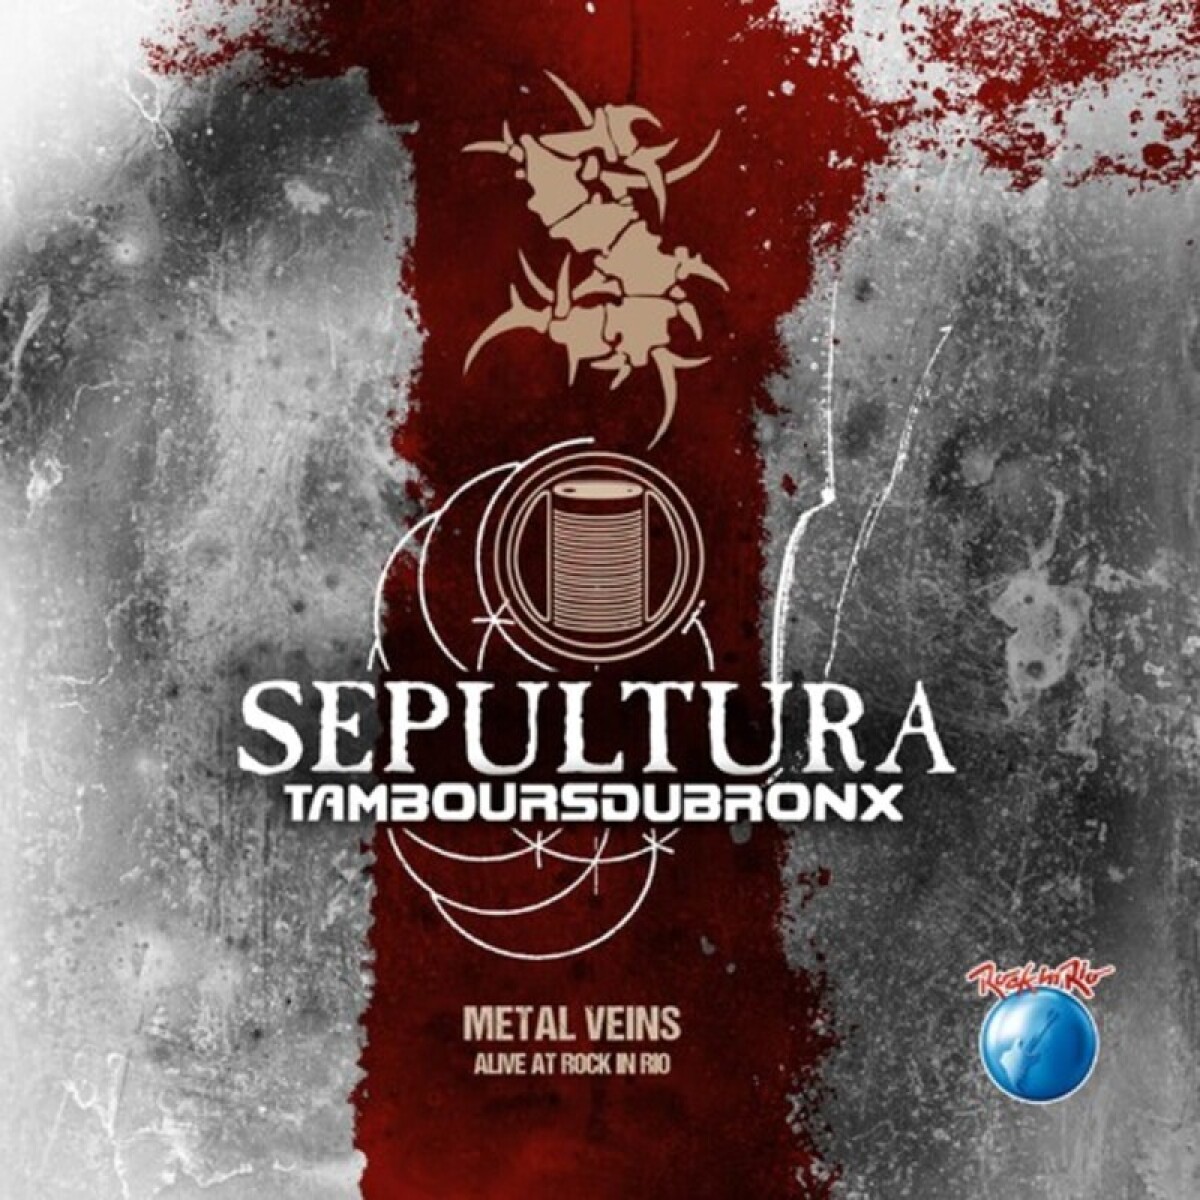 (l) Sepultura - Metal Veins - Alive At Rock In Rio - Vinilo 